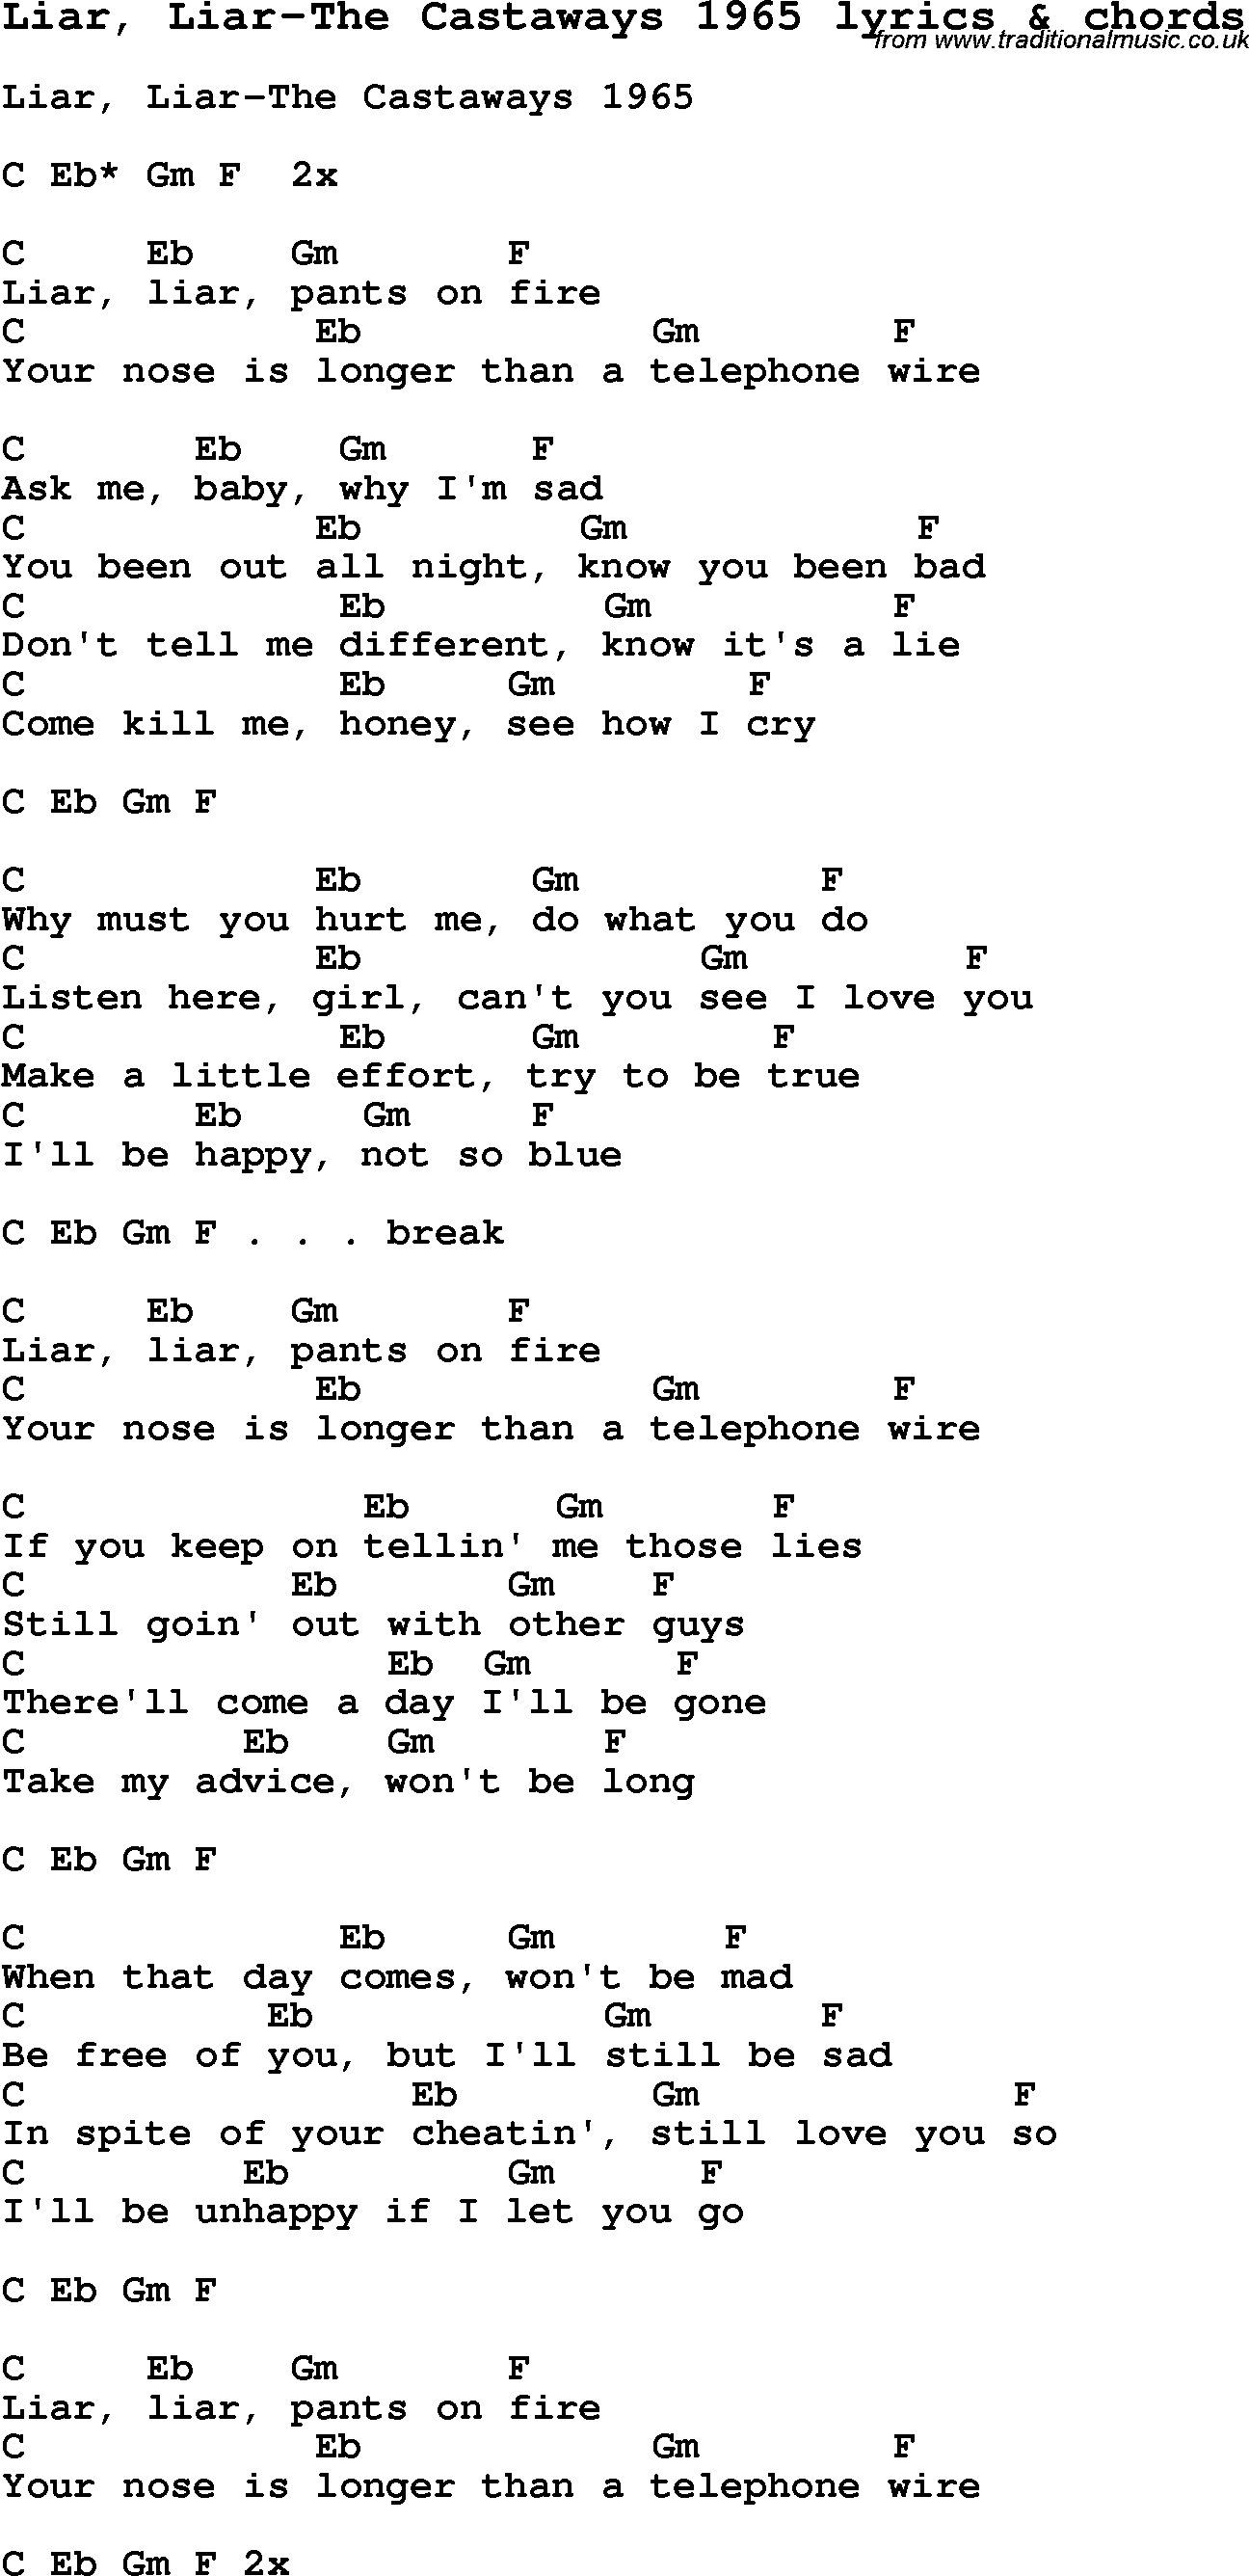 Dum nudler bølge Love Song Lyrics for:Liar, Liar-The Castaways 1965 with chords.